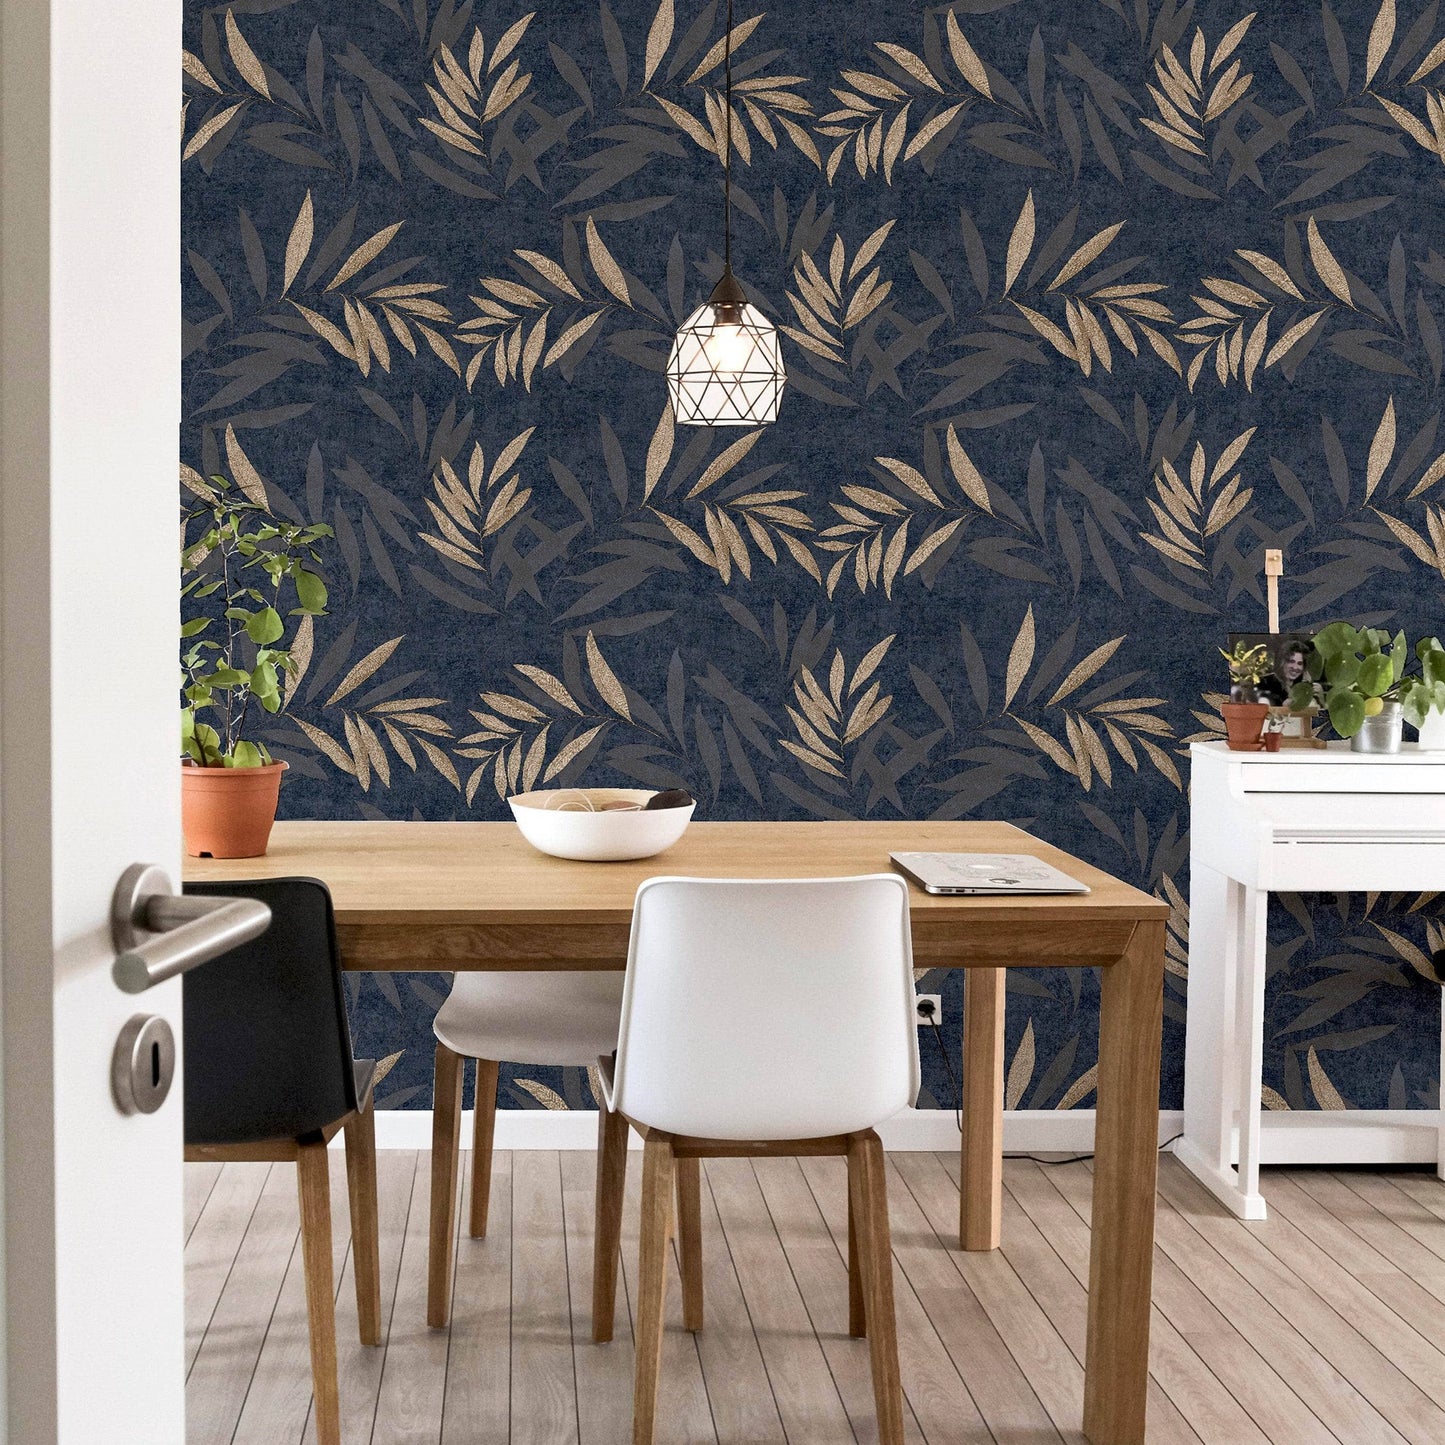 Wallpaper  -  Arthouse Luxury Navy Leaf Wallpaper - 299301  -  60003803